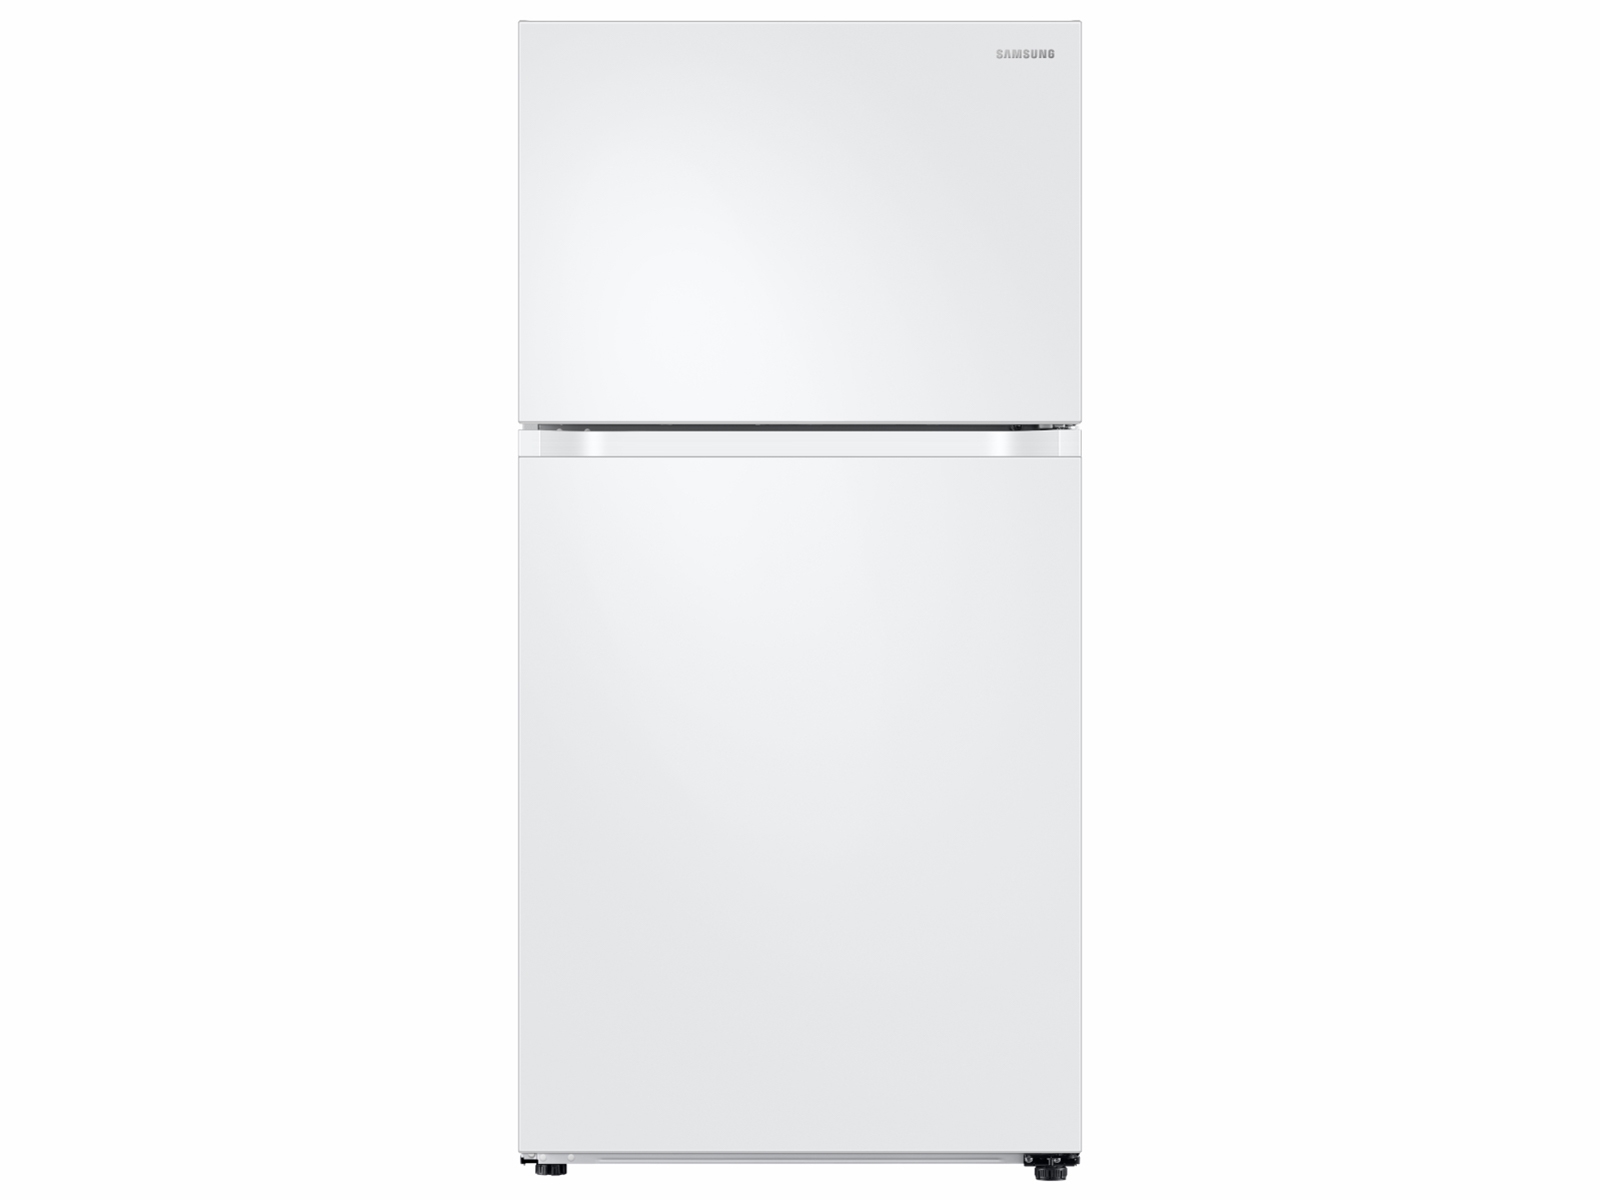 https://image-us.samsung.com/SamsungUS/home/home-appliances/refrigerators/top-mount/rt21m6215ww-aa/gallery/20171025/01_Refrigerator_Top_Freezer_RT21M6215WW_Front_Closed_White-20171025.jpg